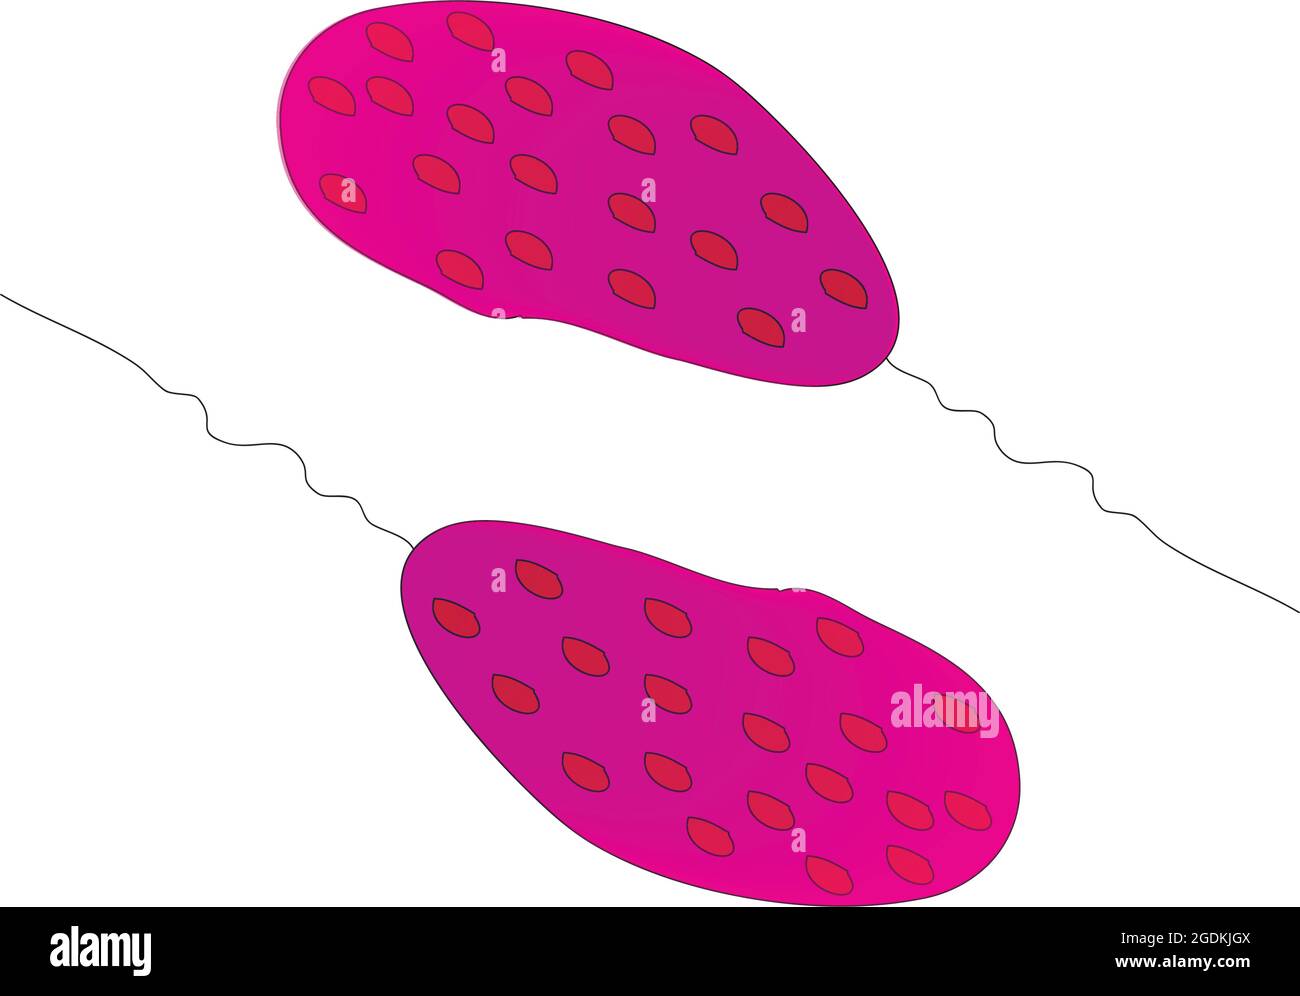 Batteri di zolfo viola, parte di un gruppo di Proteobatteri capaci di fotosintesi, collettivamente indicati come batteri porpora, Proteobatteri Illustrazione Vettoriale